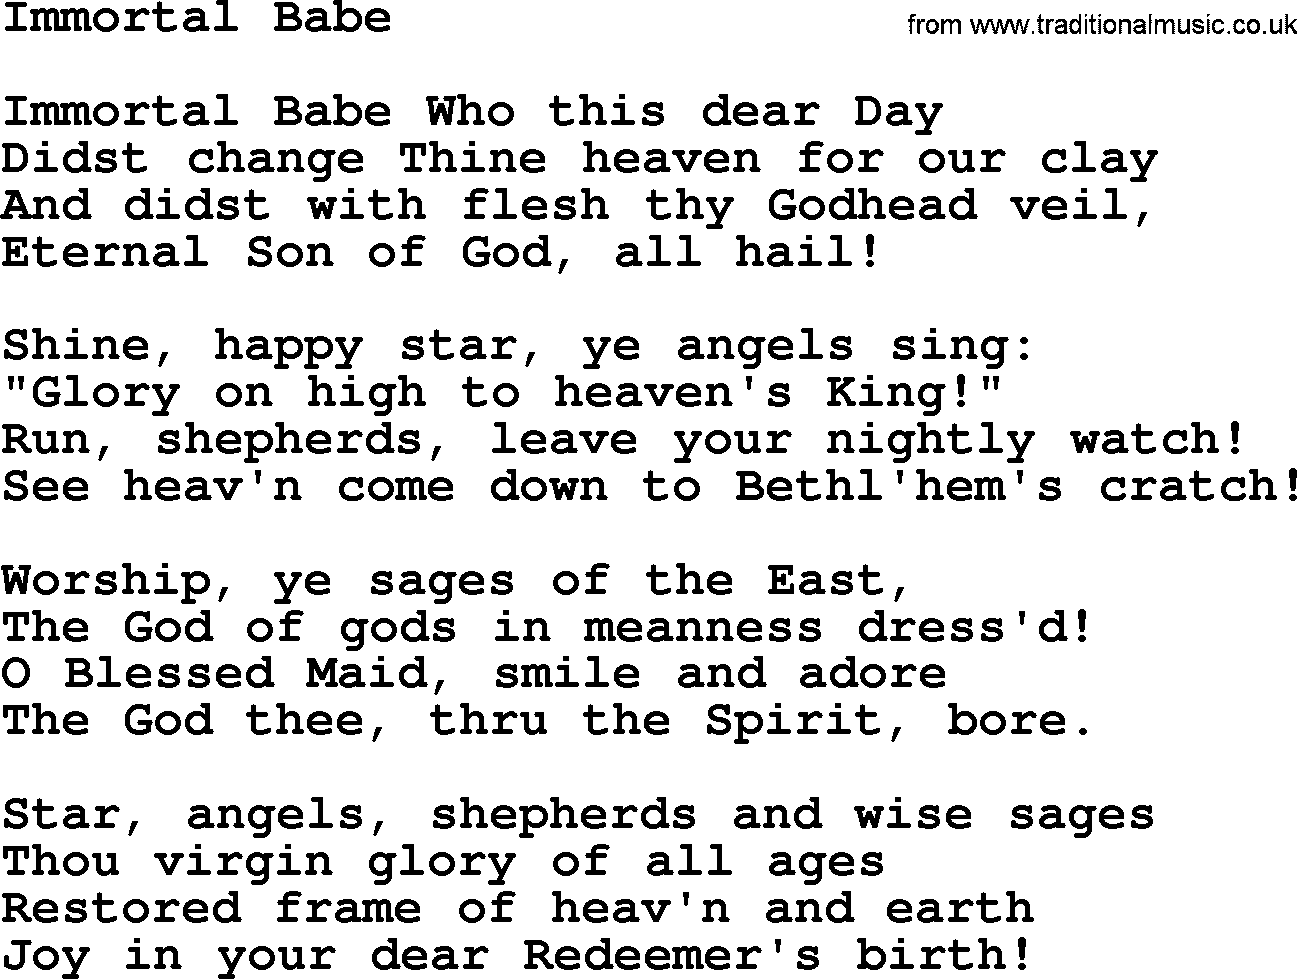 Catholic Hymn: Immortal Babe lyrics with PDF